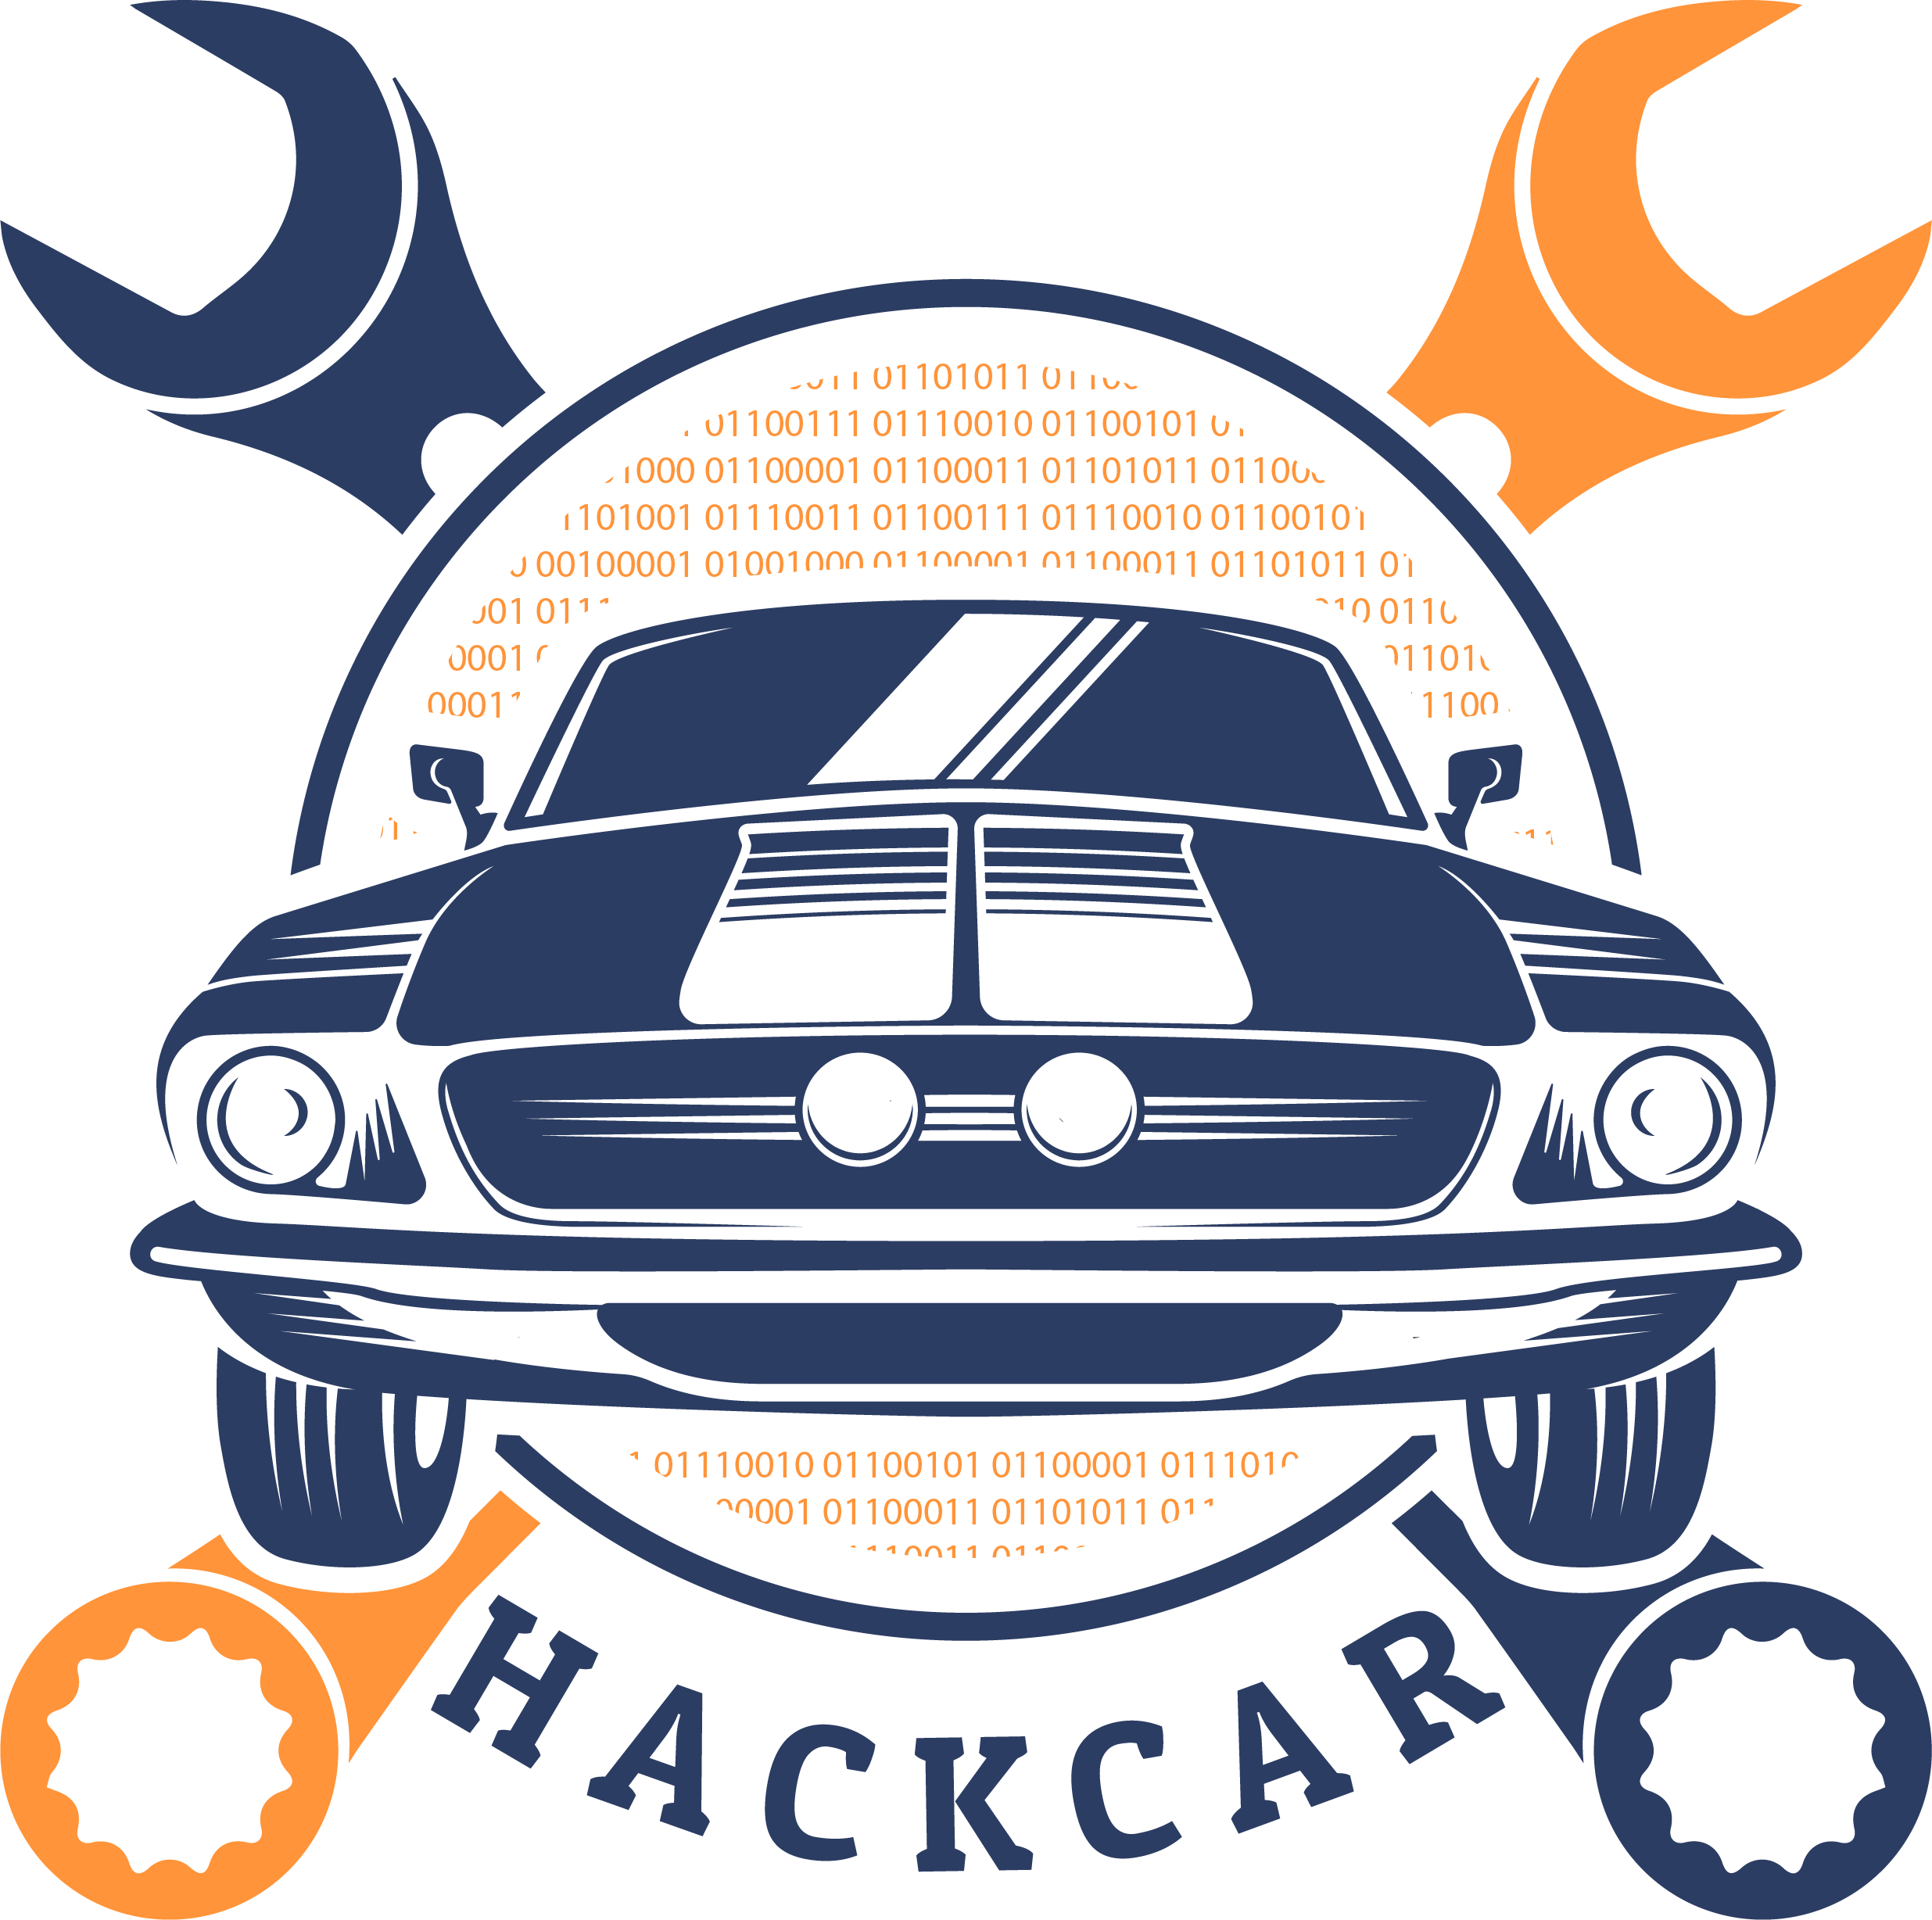 HackCar